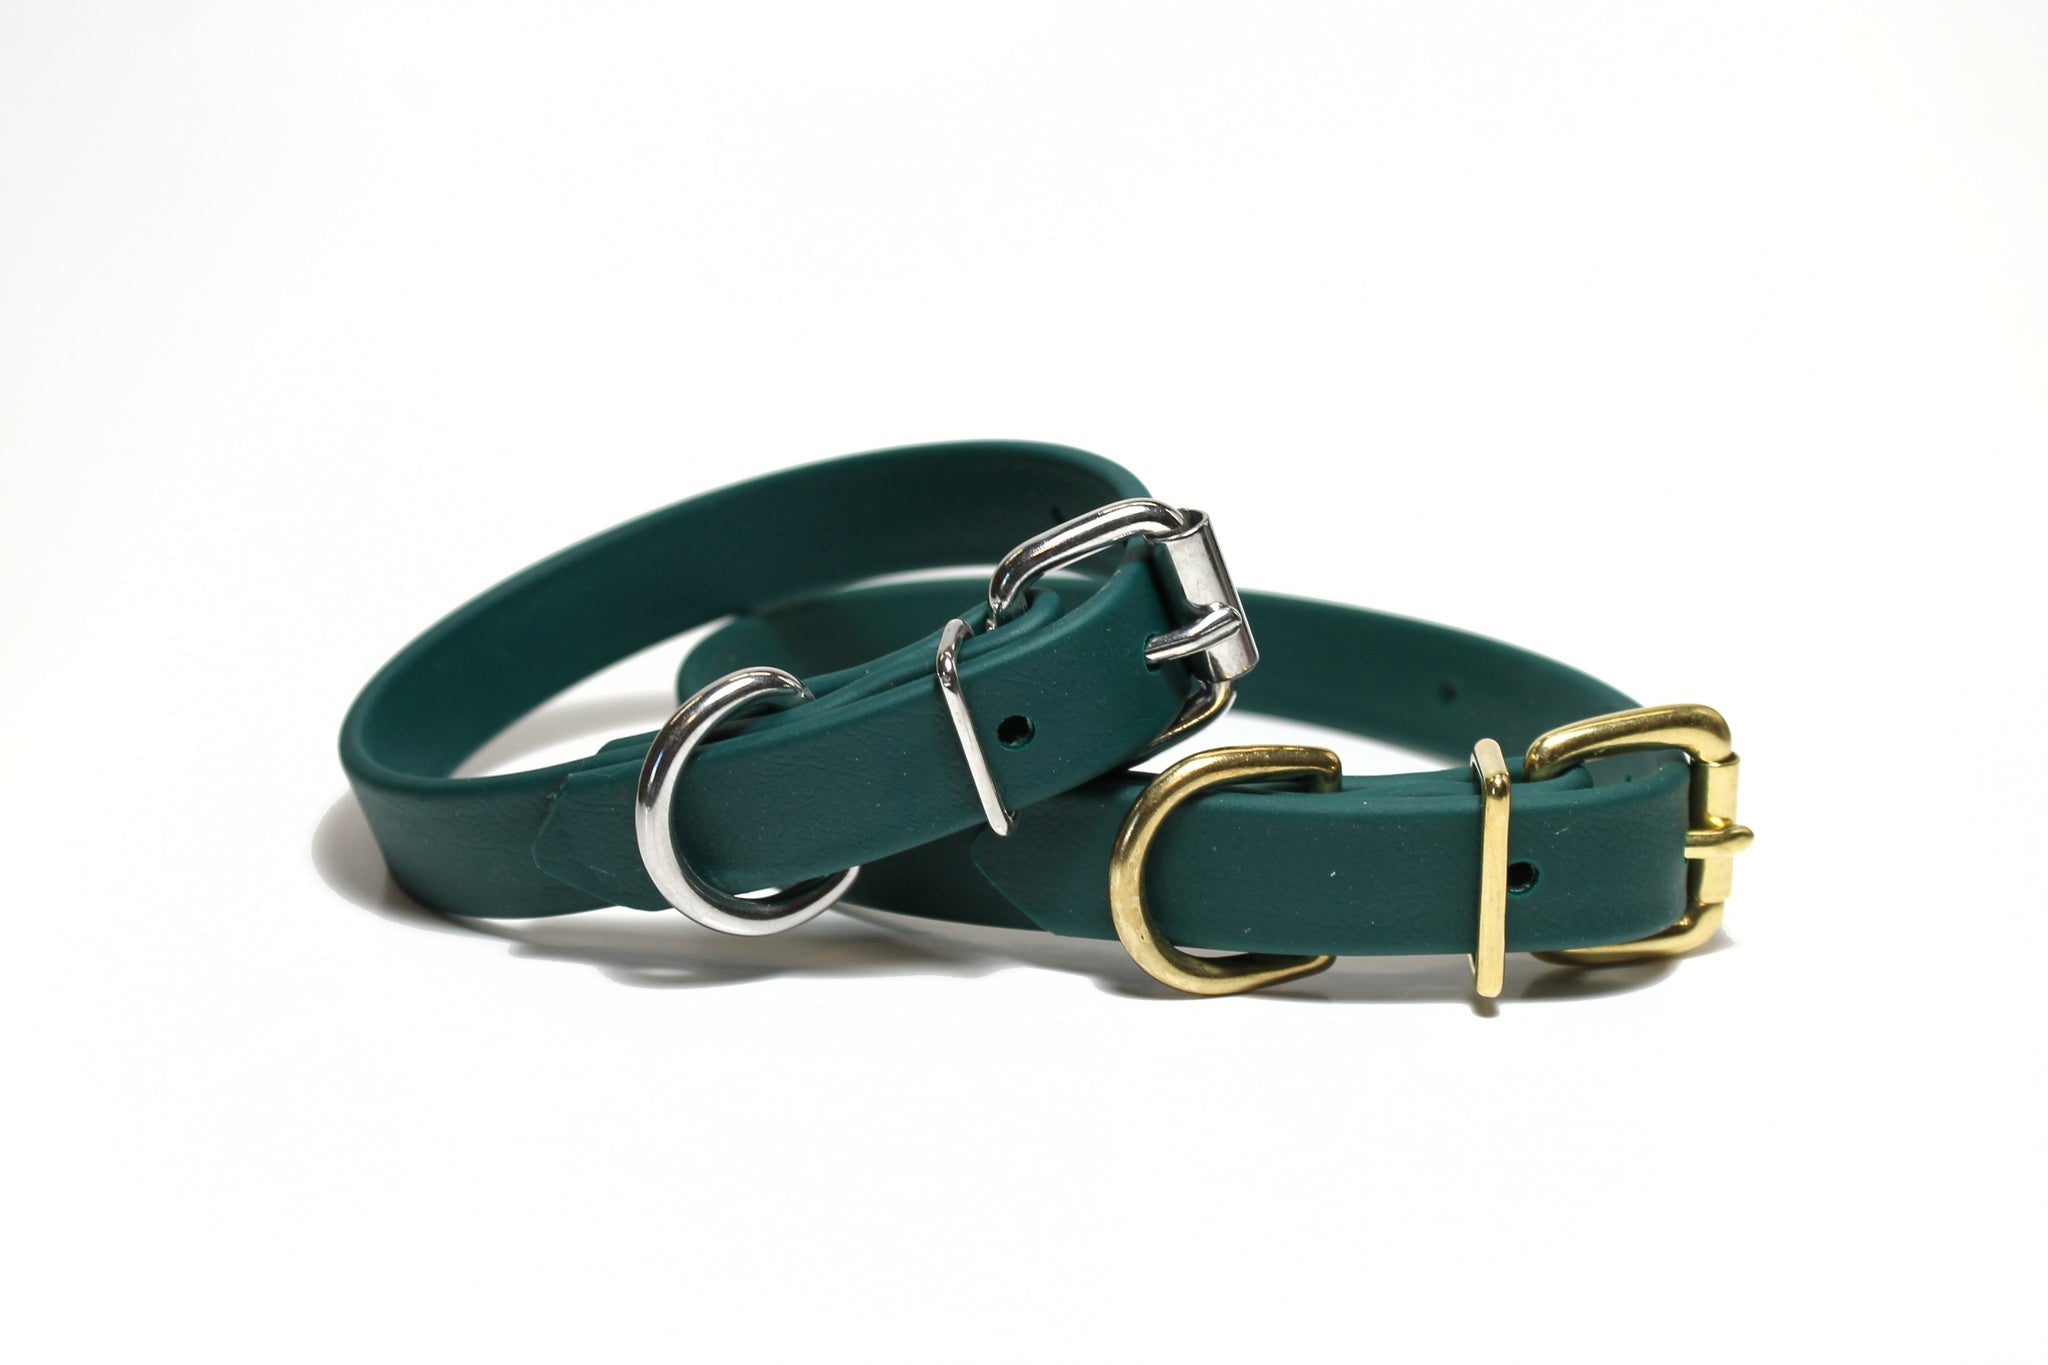 Pine Green Biothane Dog Collar - 3/4" (20mm) wide